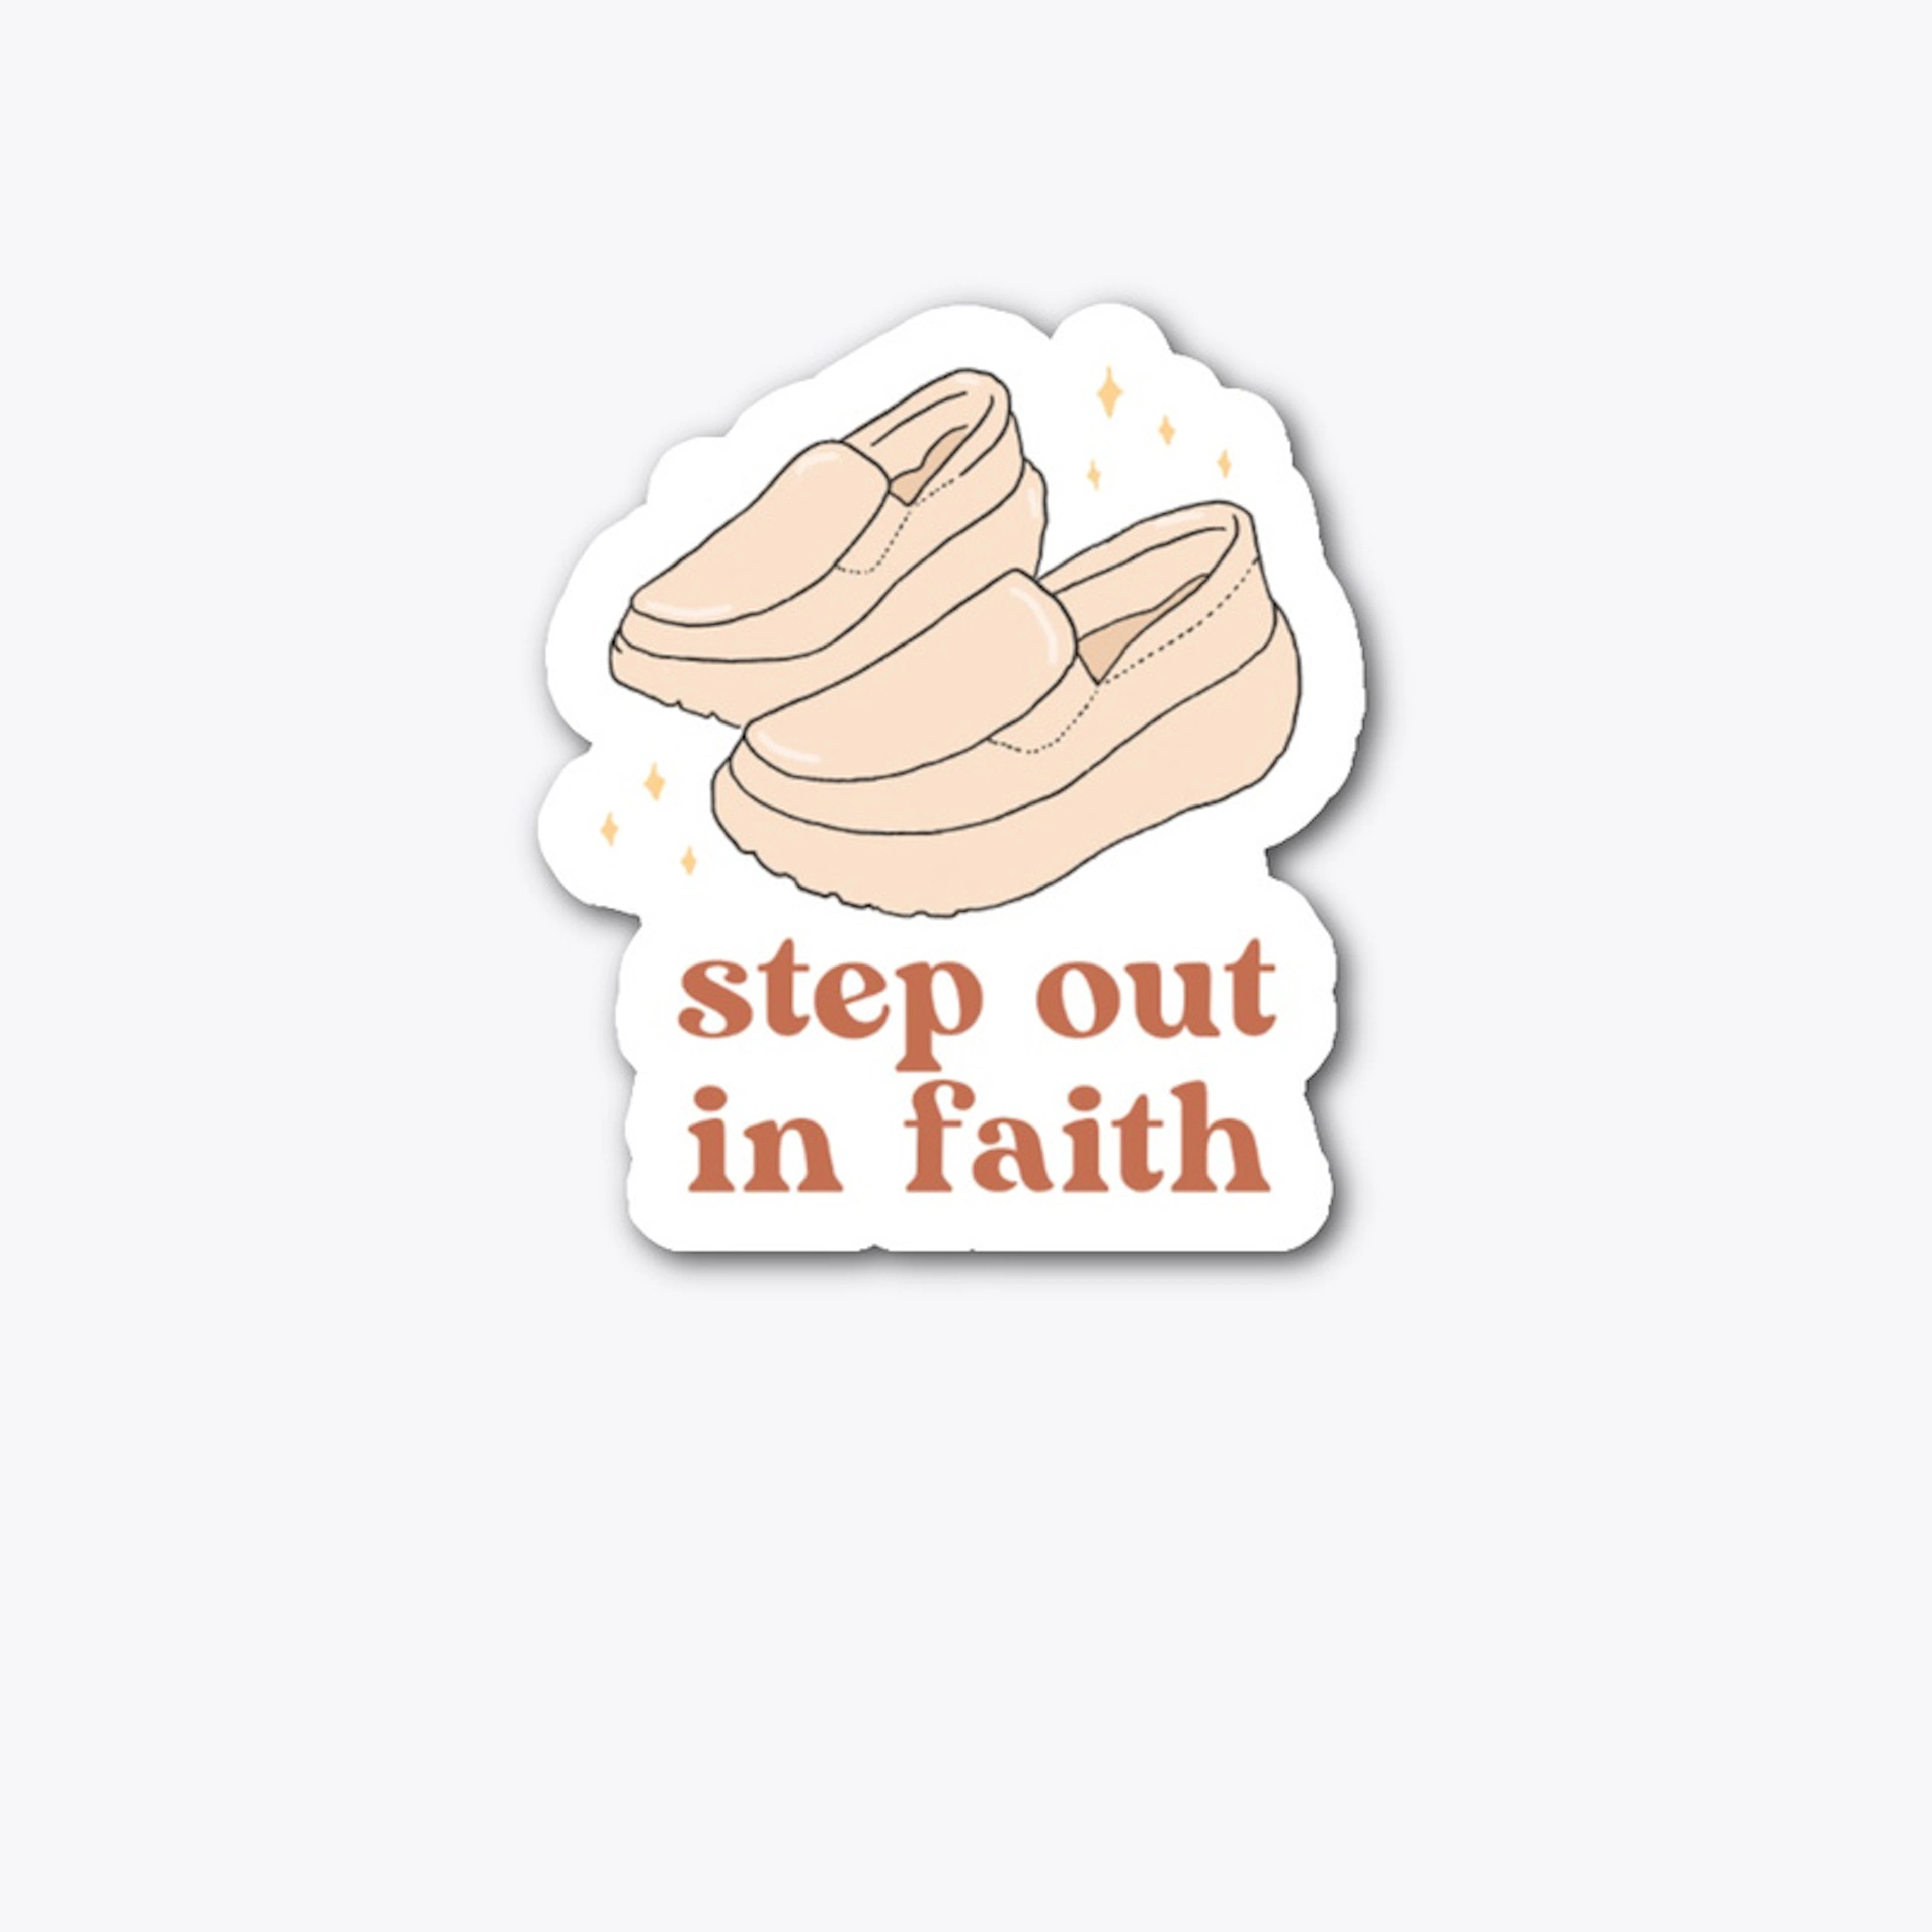 Step out in faith